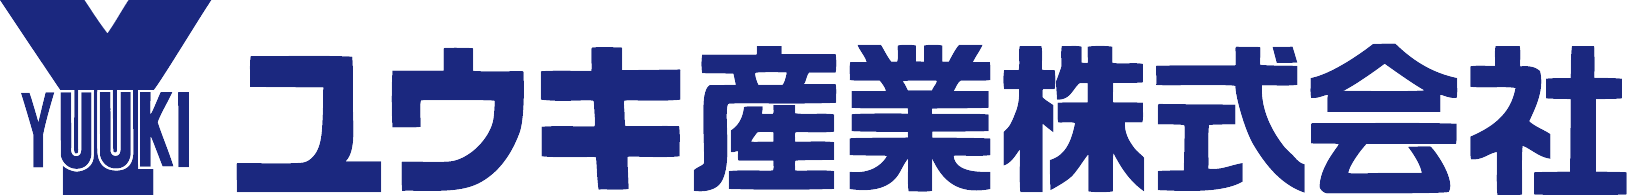 ELY logo